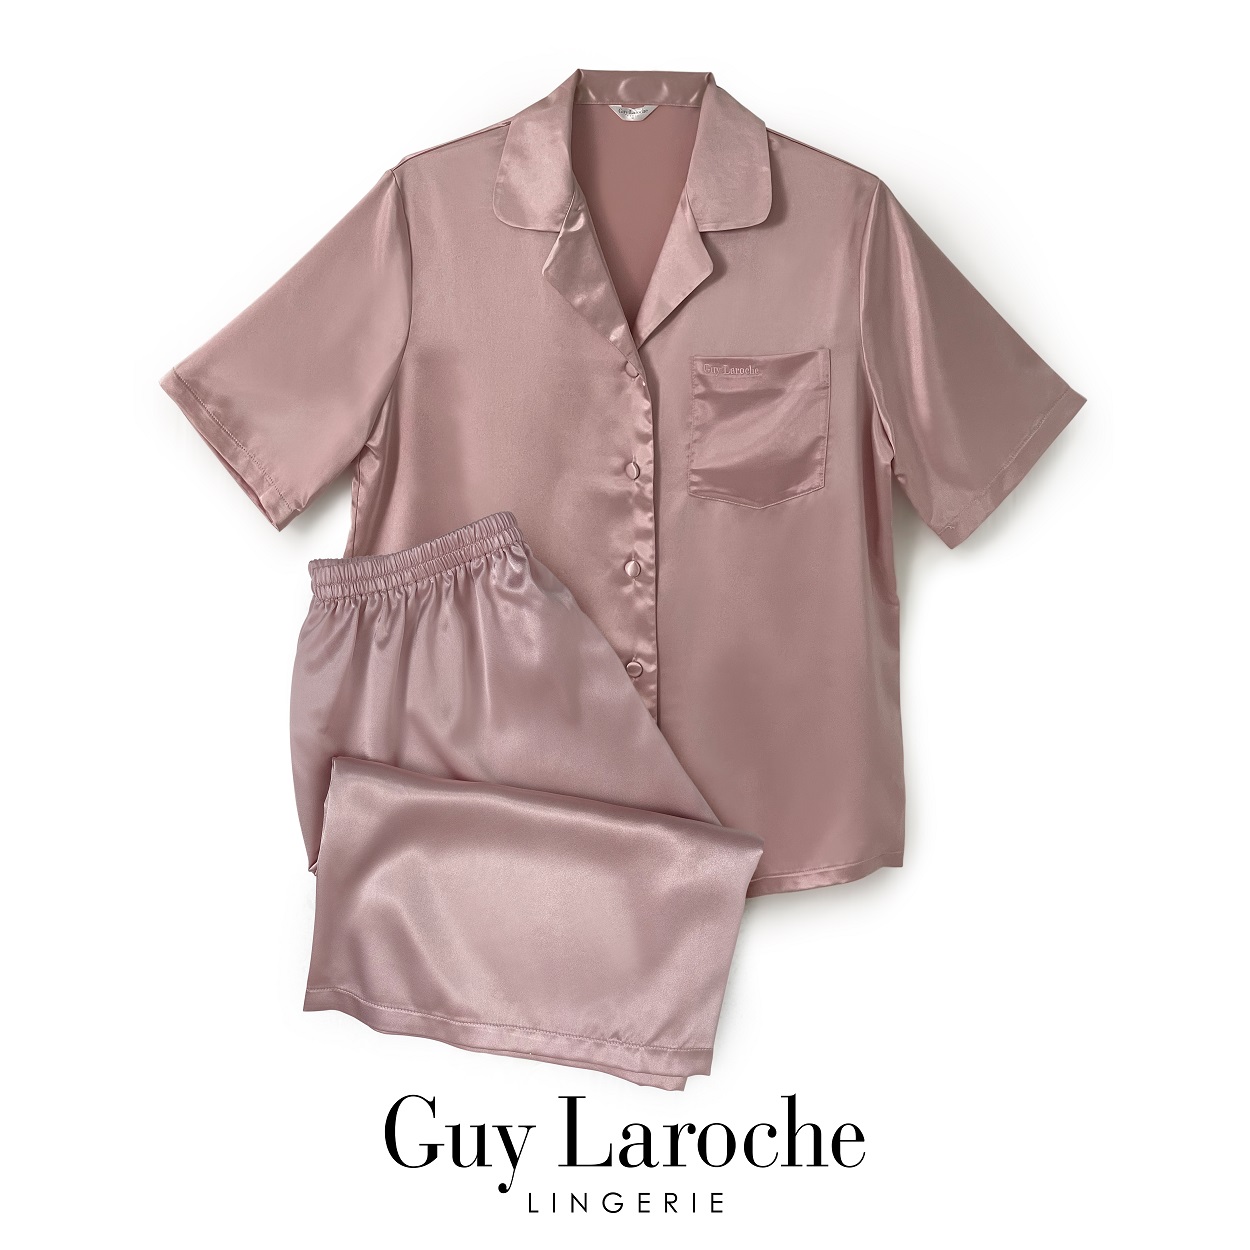 Guy Laroche Lingerie : Satin Nightwear GV3019 ชุดนอนซาติน แขนสั้นขาสั้น